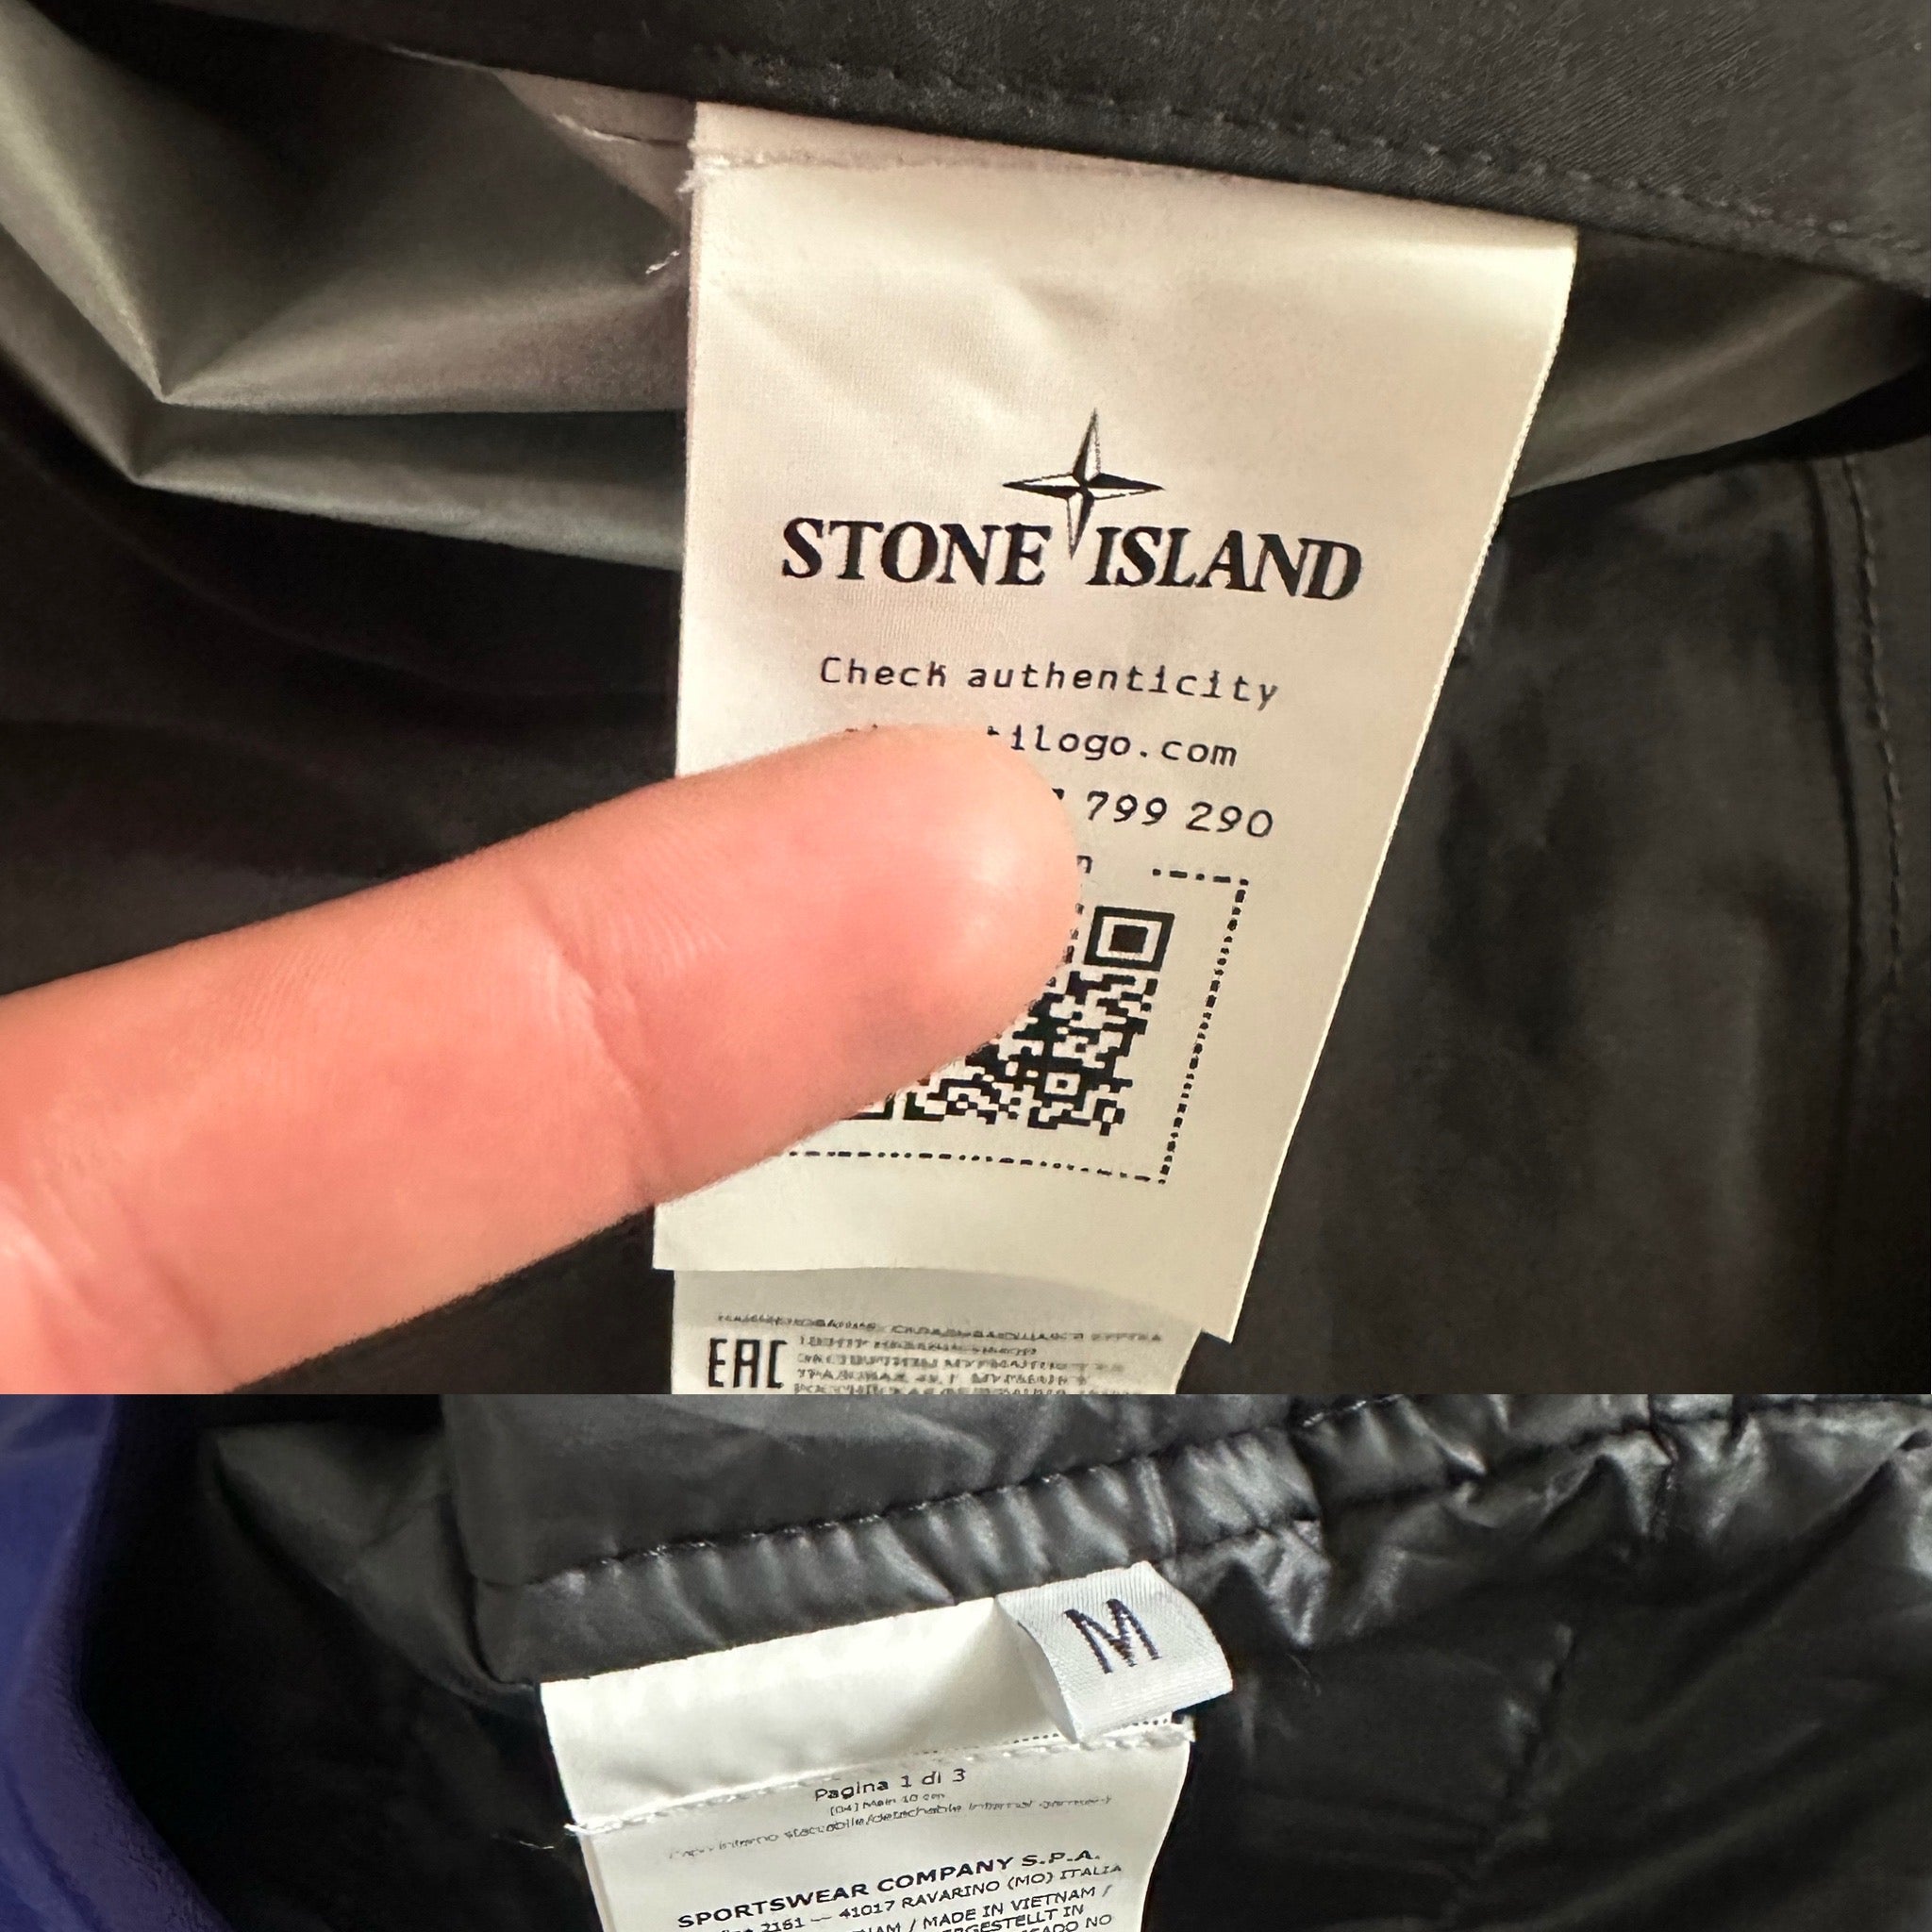 Stone Island 3 in 1 Anorak Goretex Jacket with Bag & Gilet